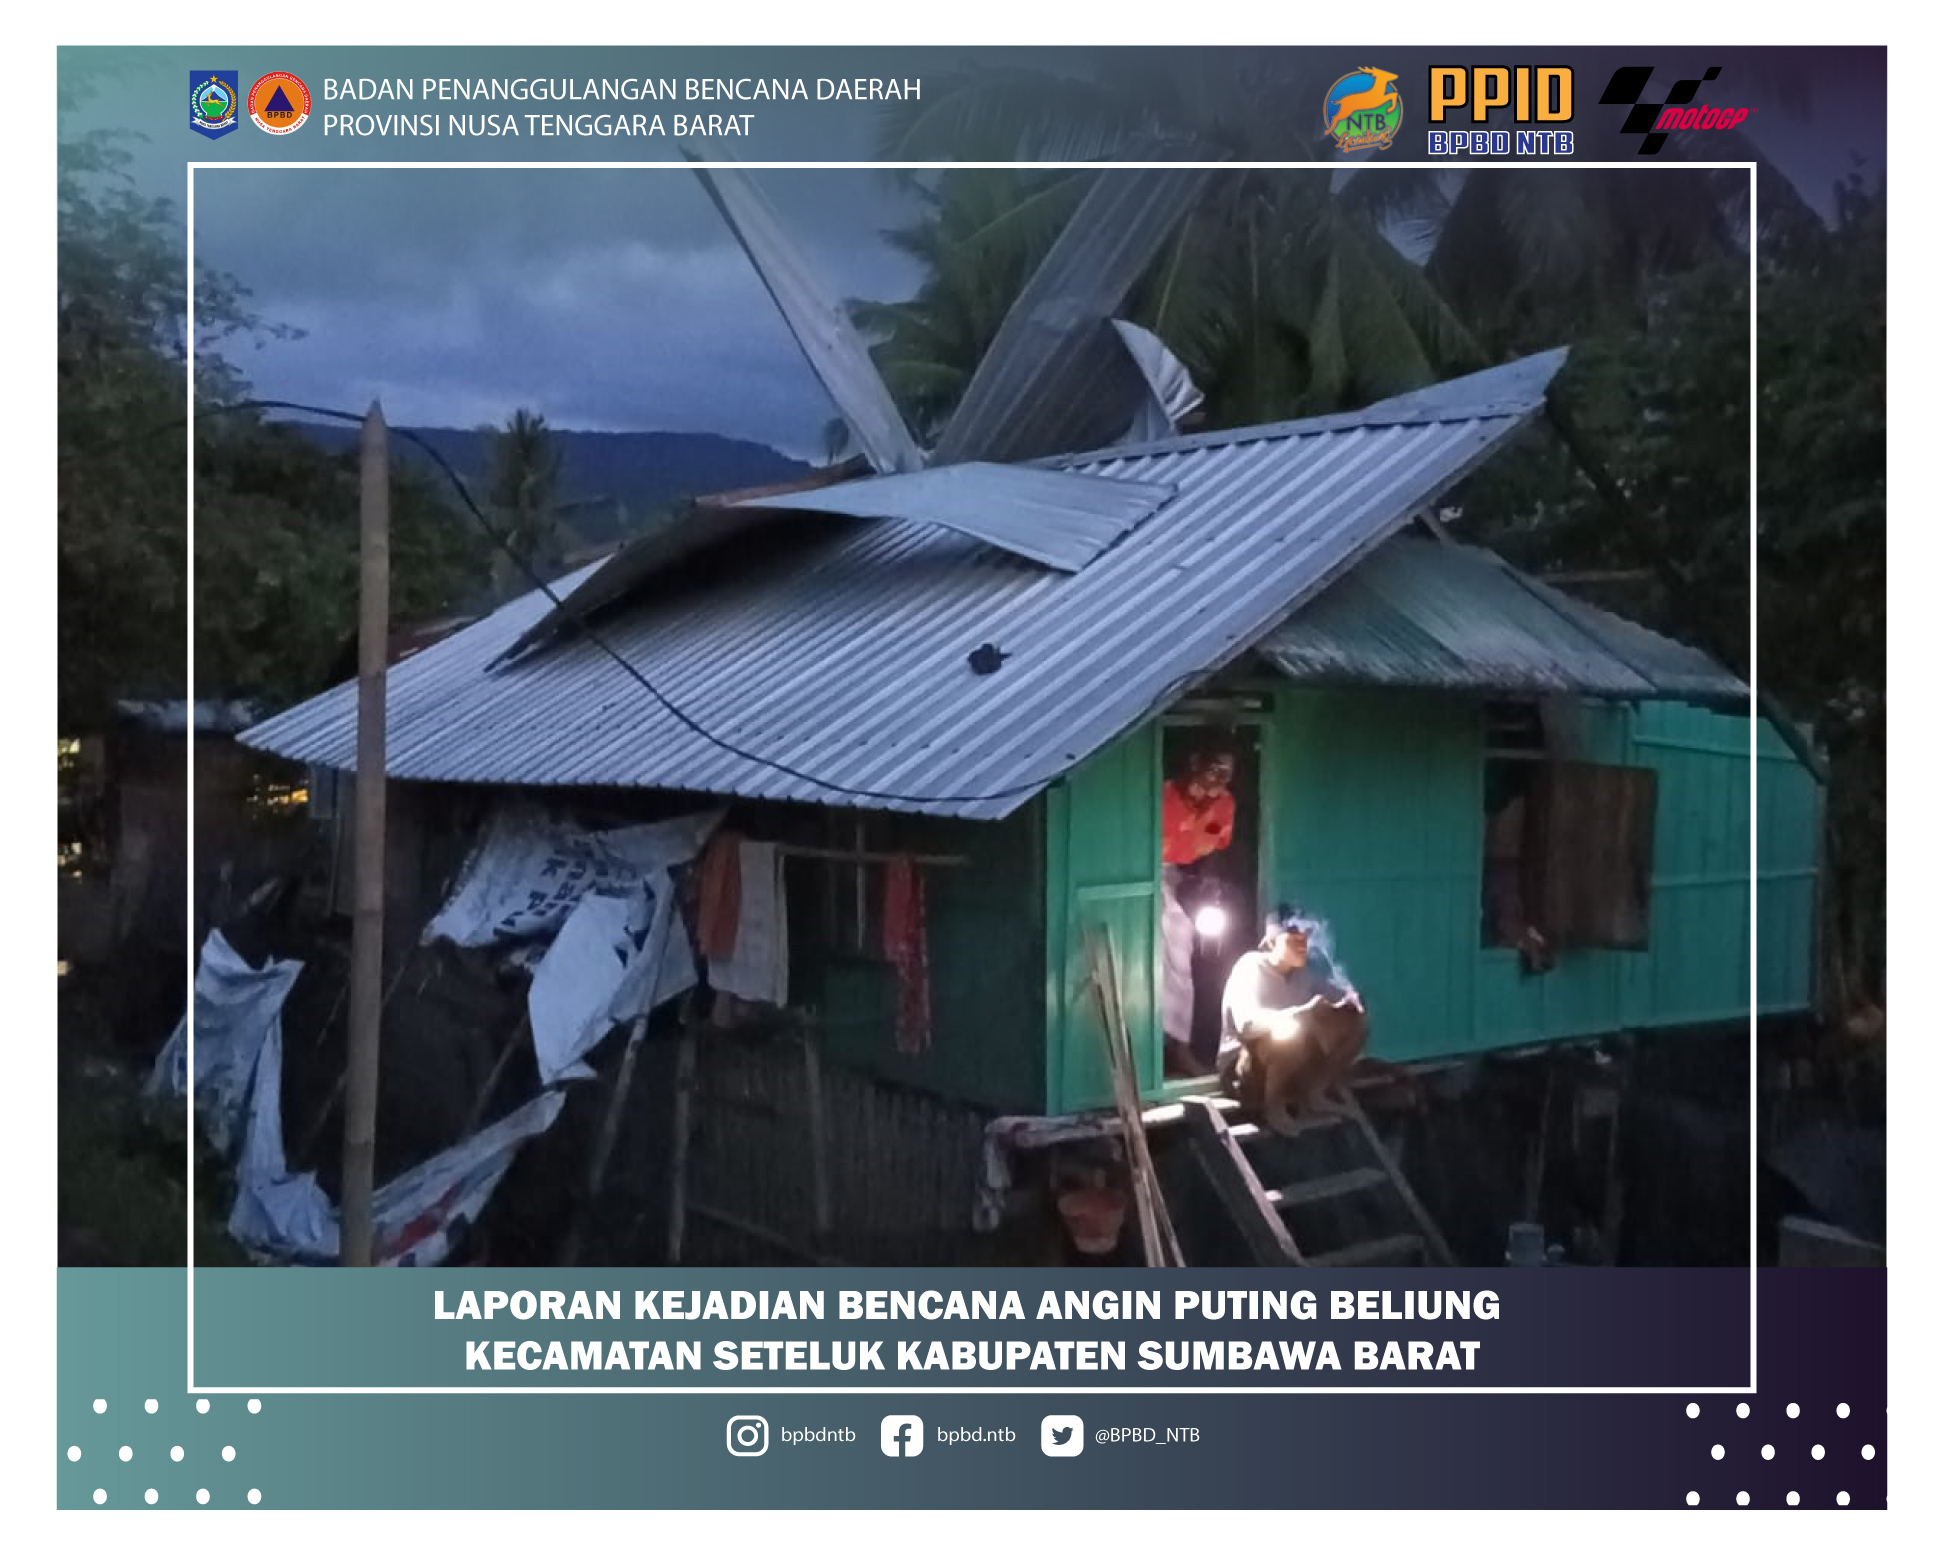 Laporan Kejadian Bencana Angin Puting Beliung Kabupaten Sumbawa Barat (Kamis, 25 November 2021)